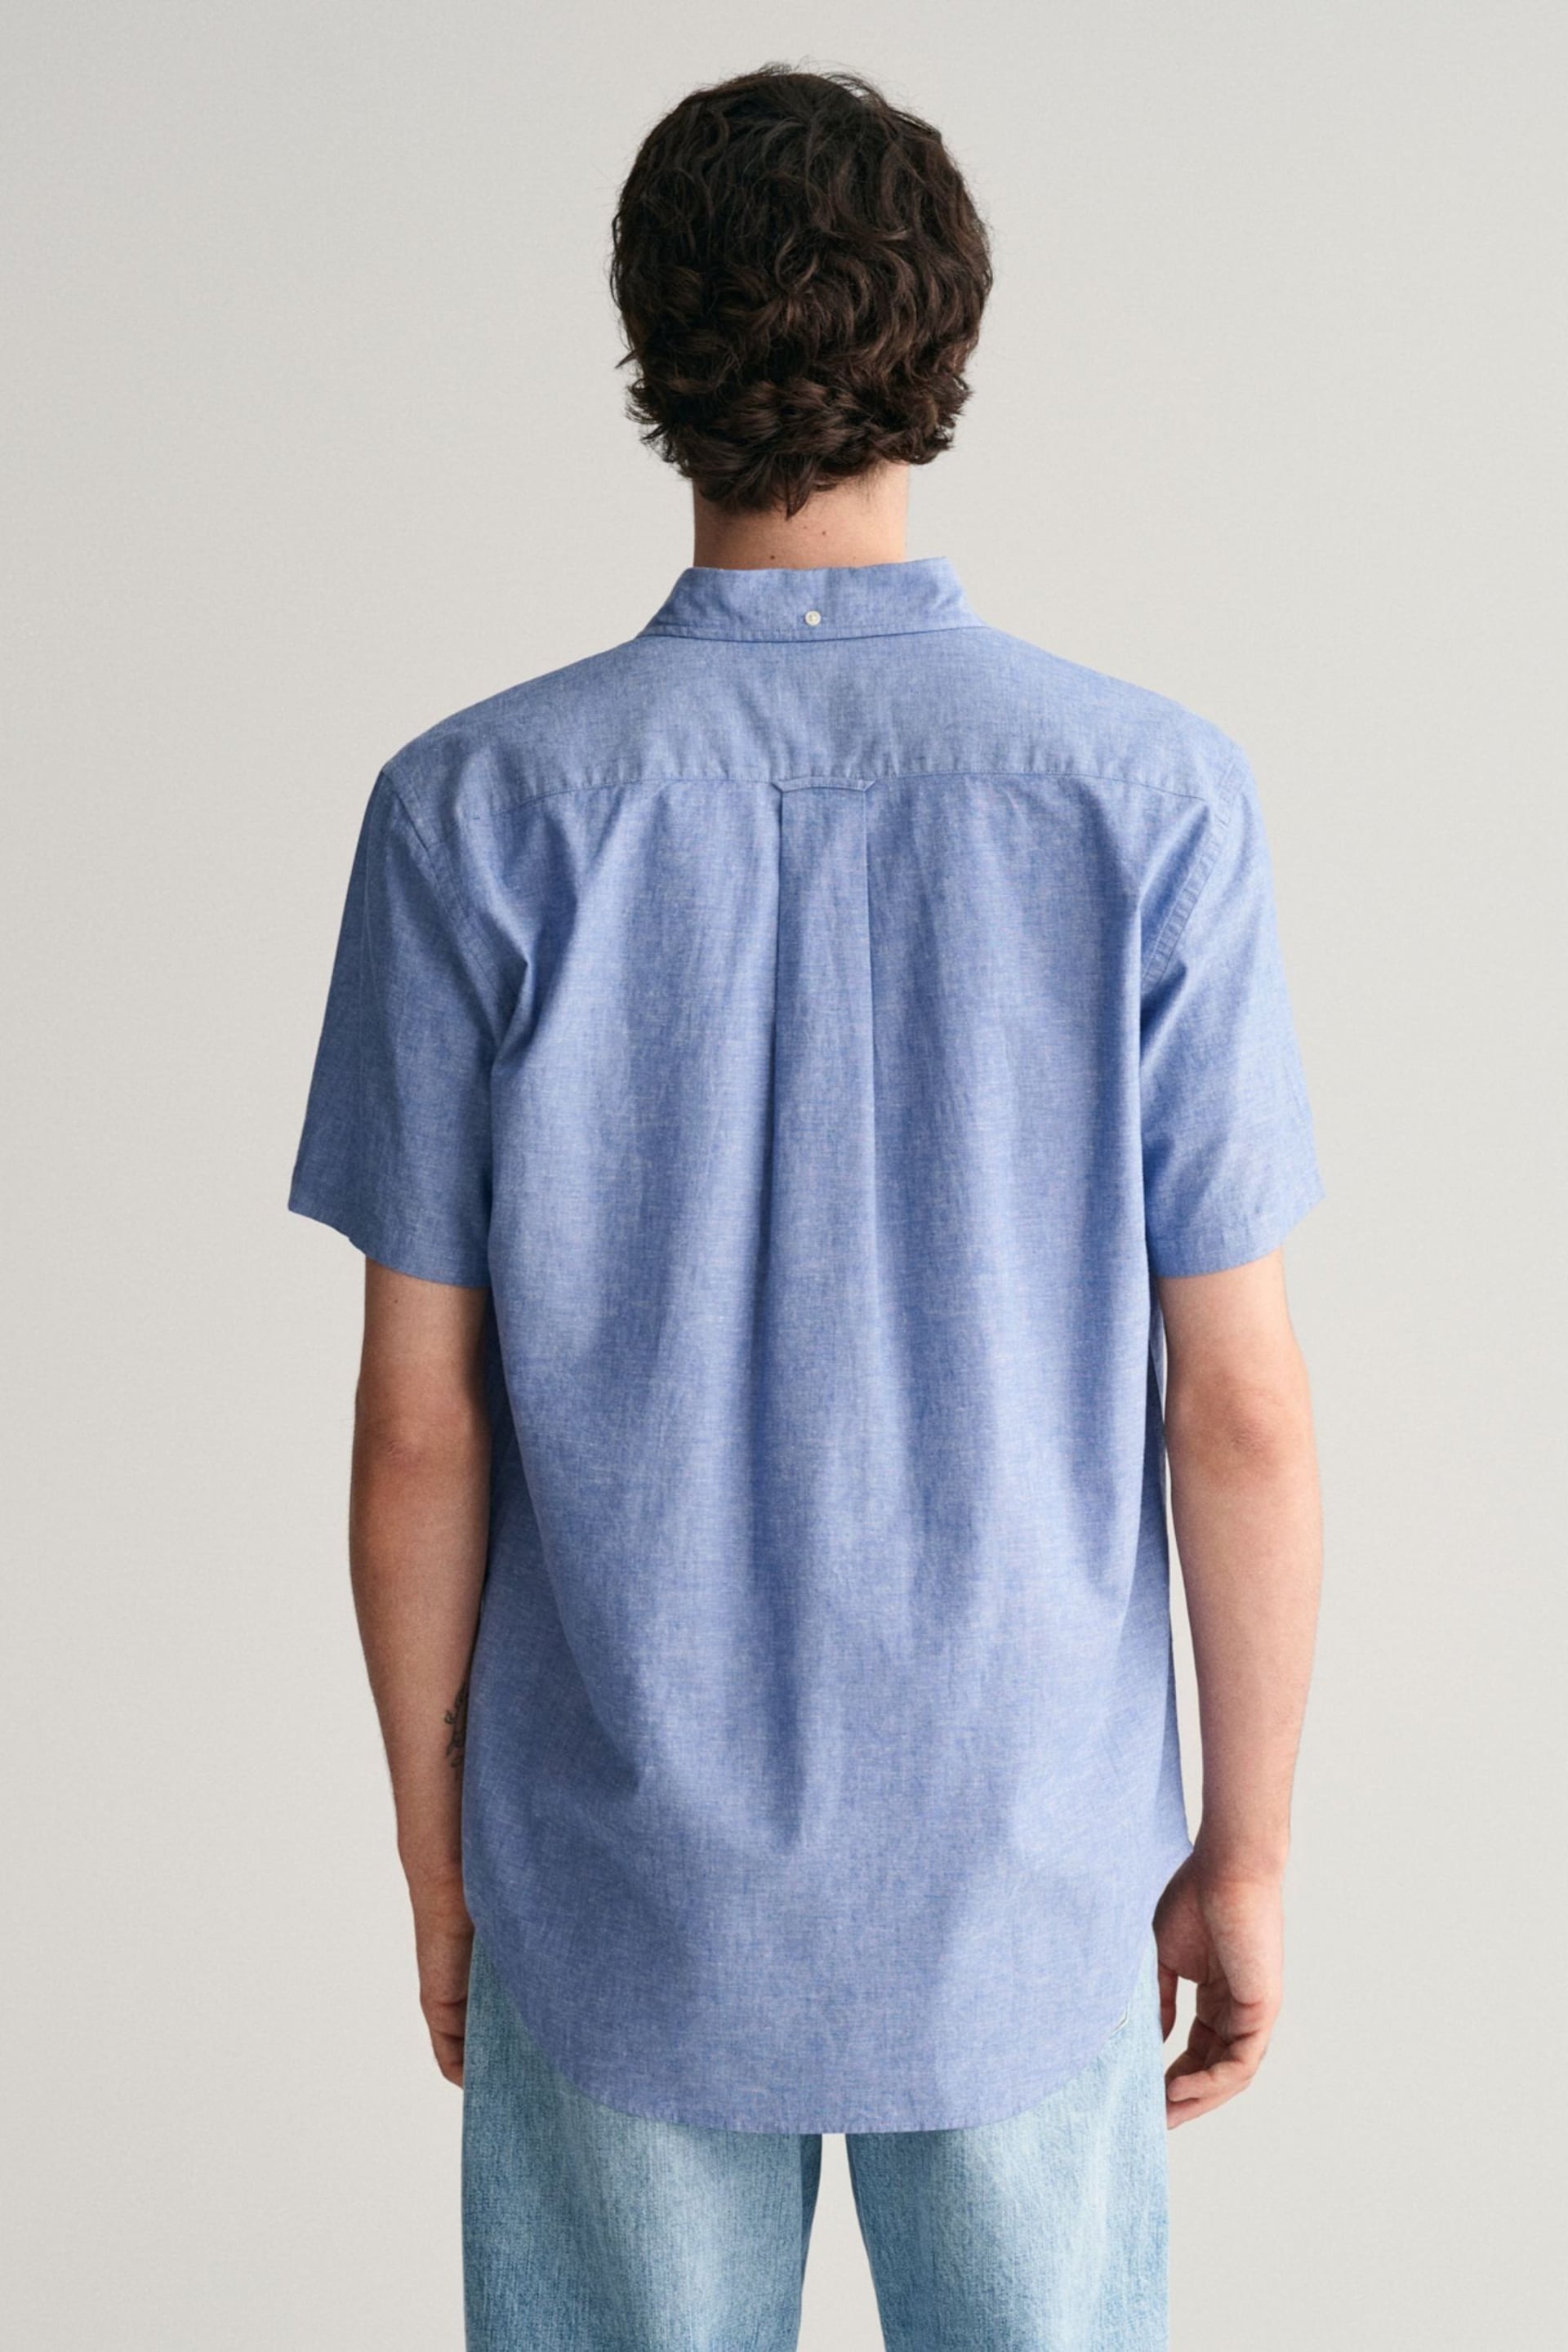 GANT Blue Regular Fit Cotton Linen Short Sleeve Shirt - Image 2 of 5